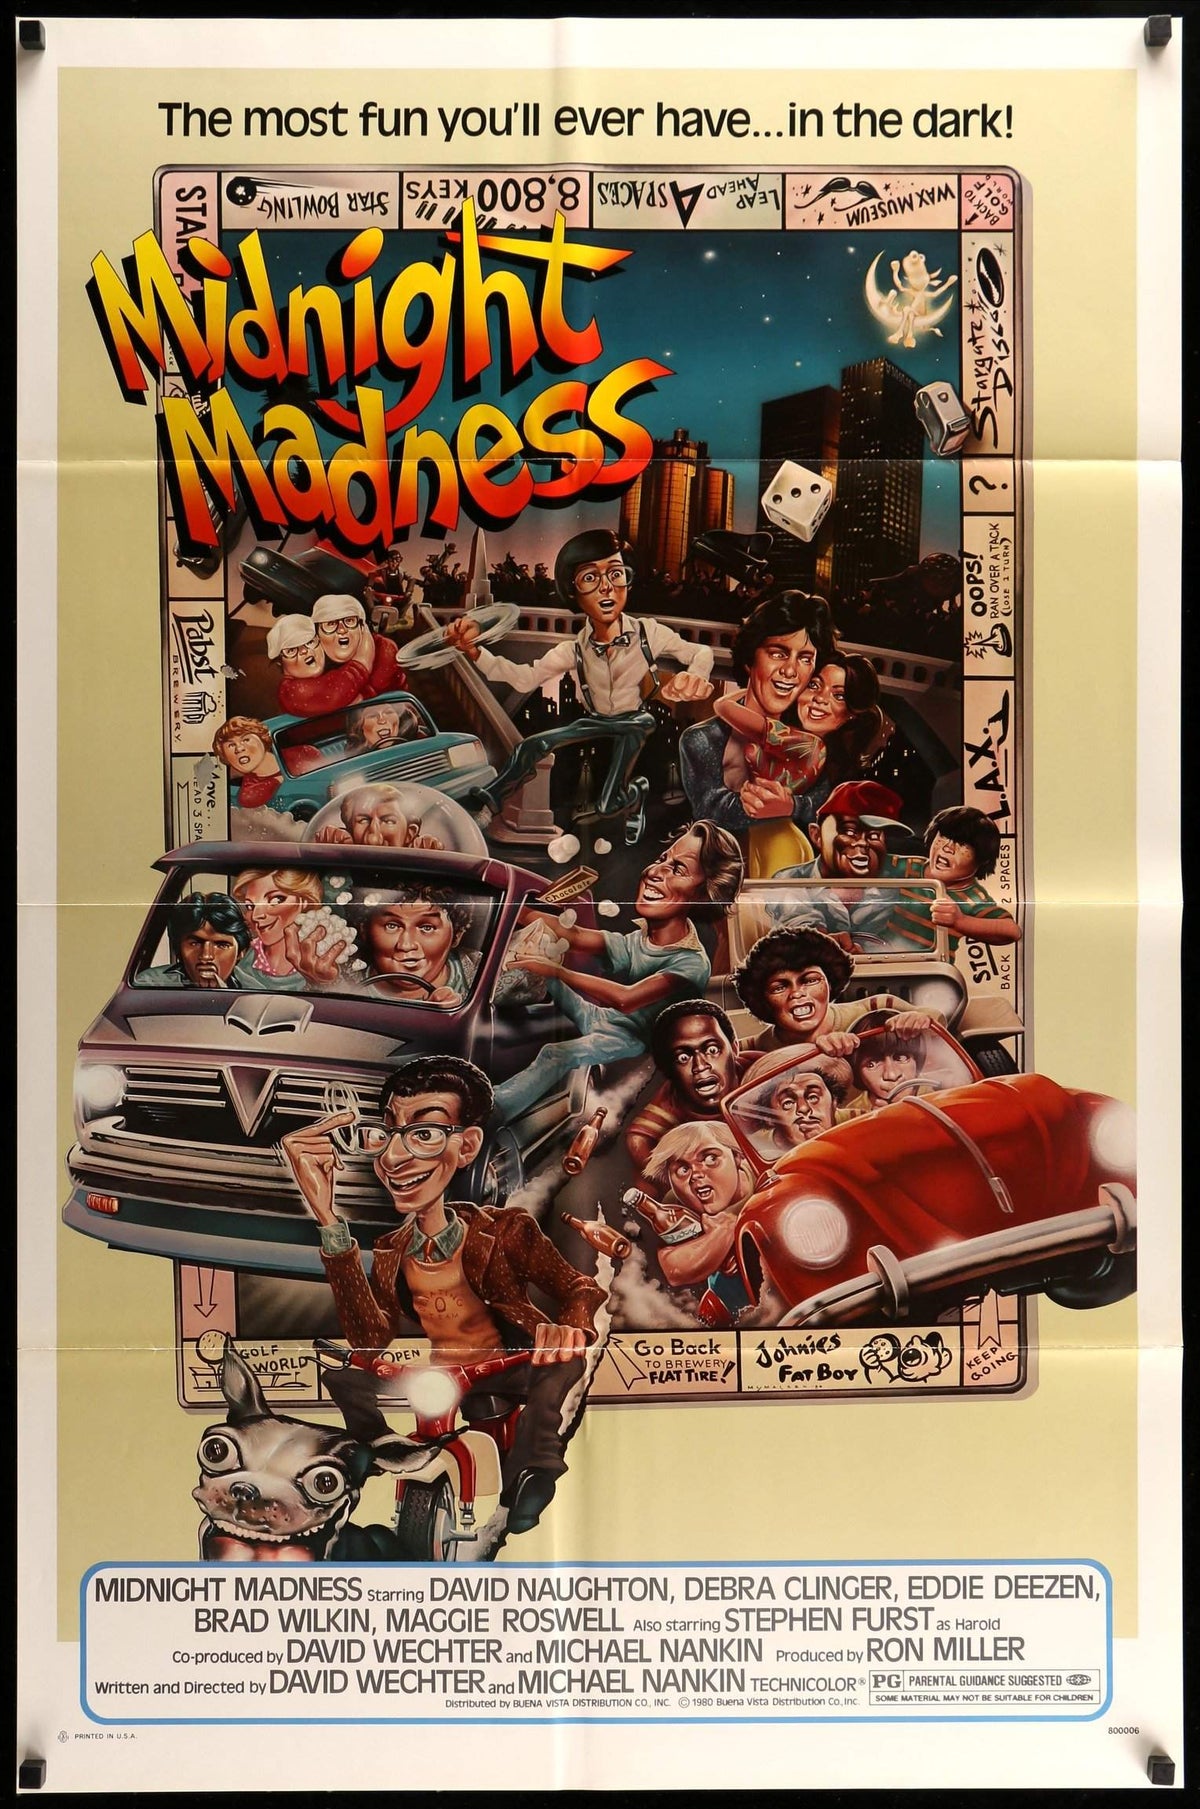 Midnight Madness (1980) original movie poster for sale at Original Film Art